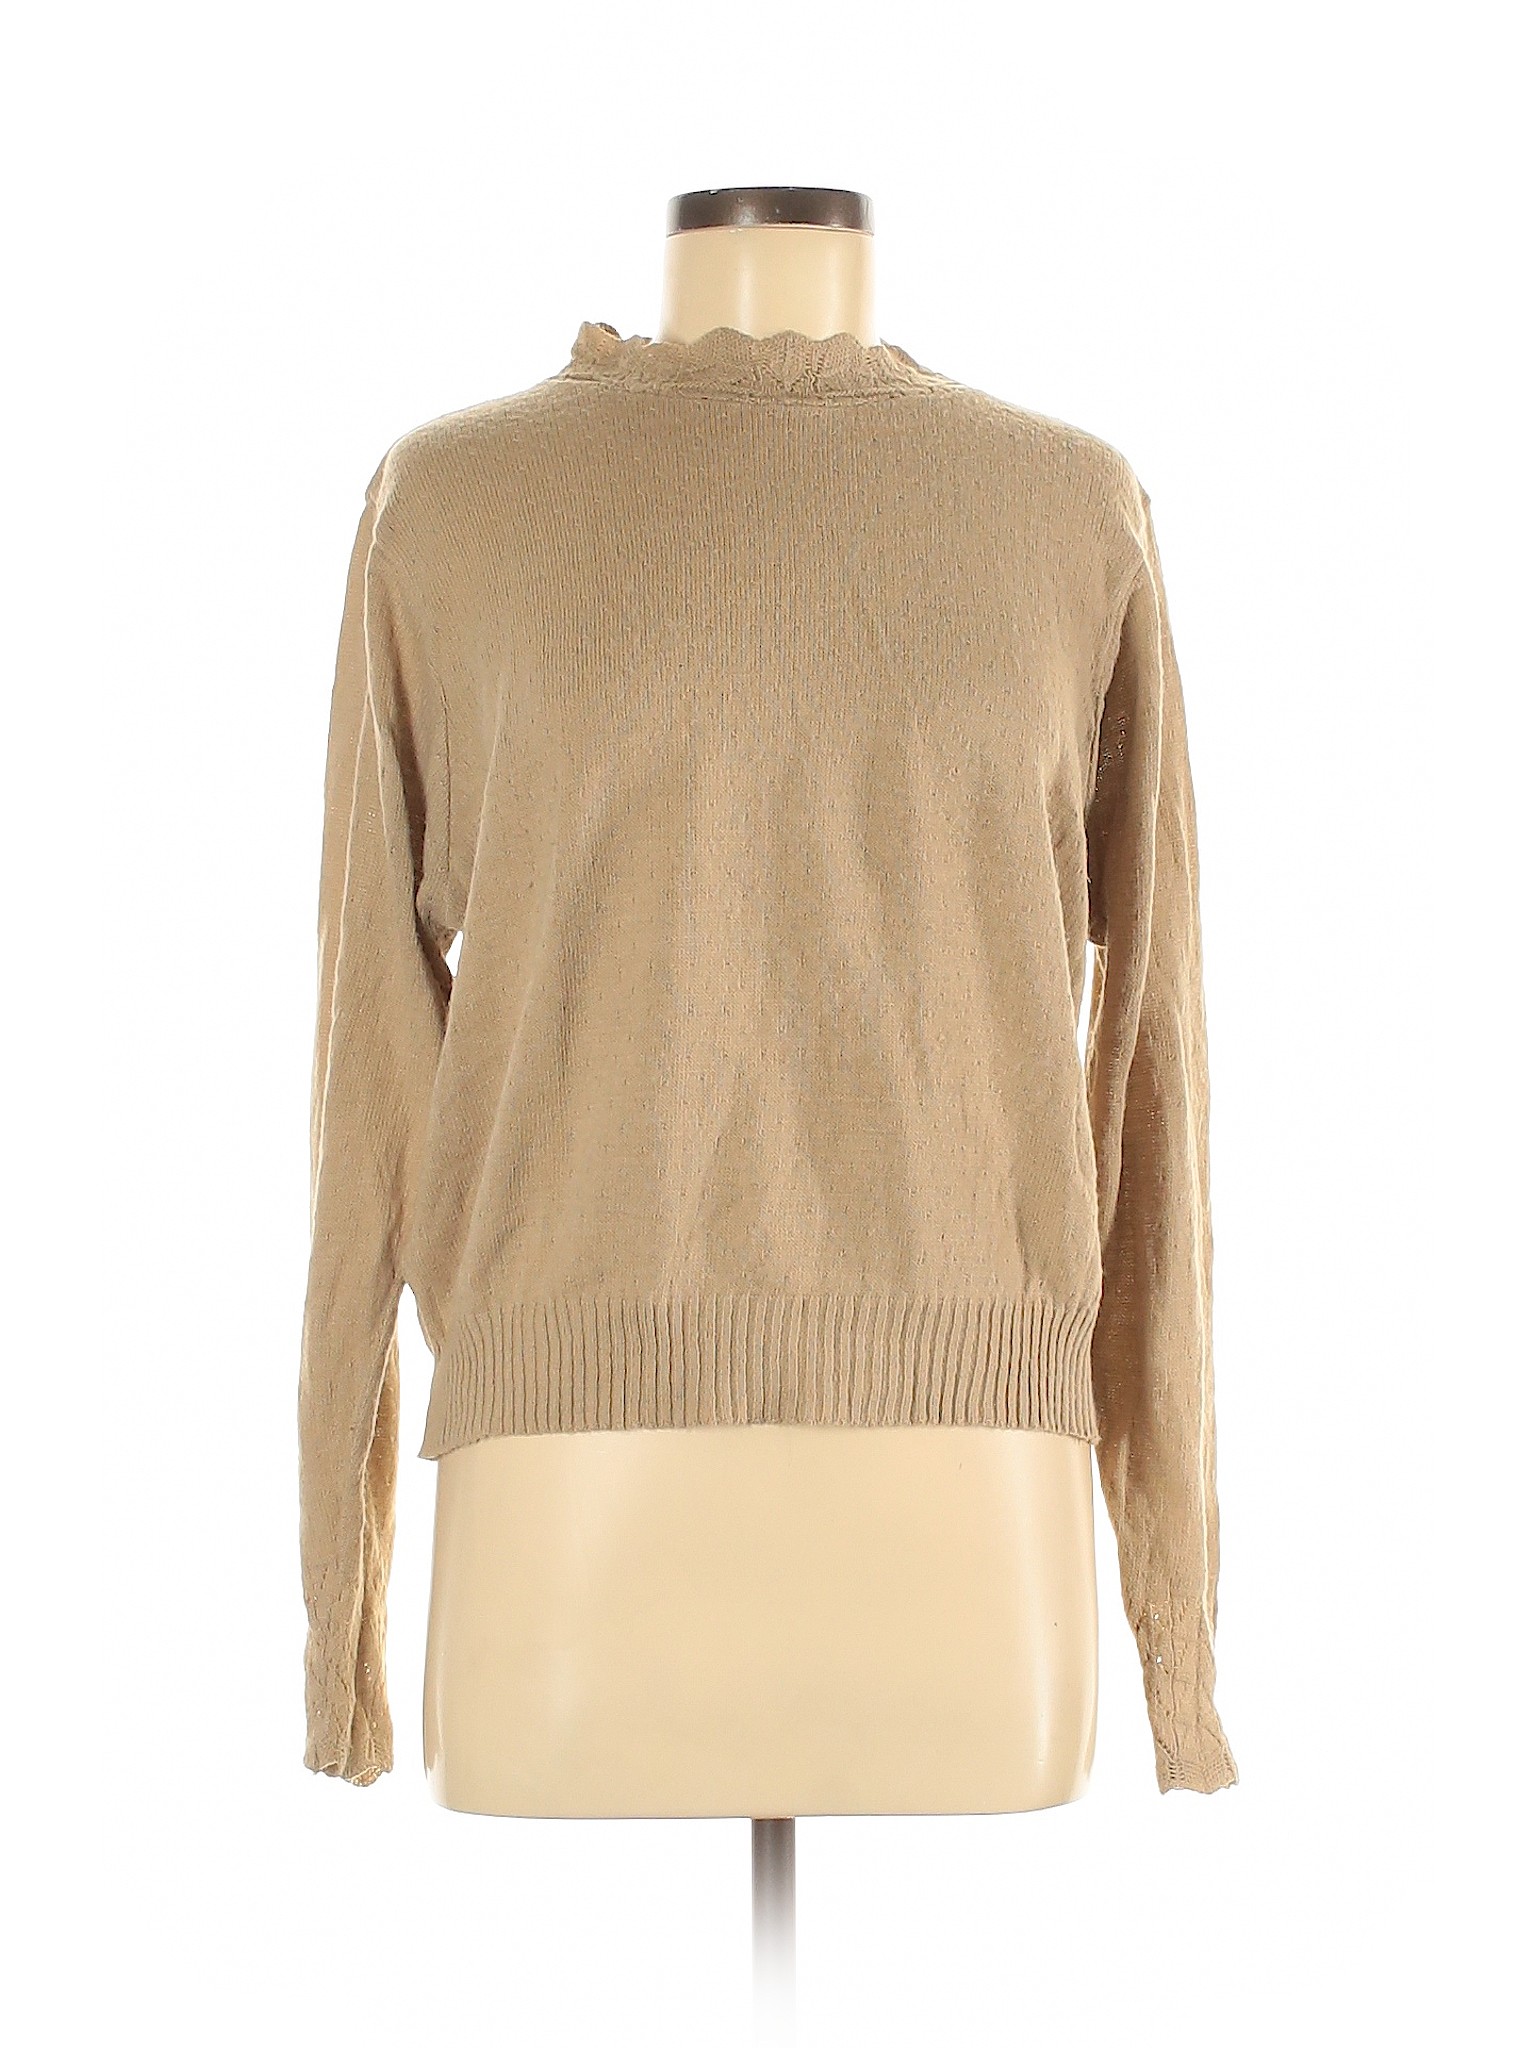 Haband! Women Brown Pullover Sweater M | eBay